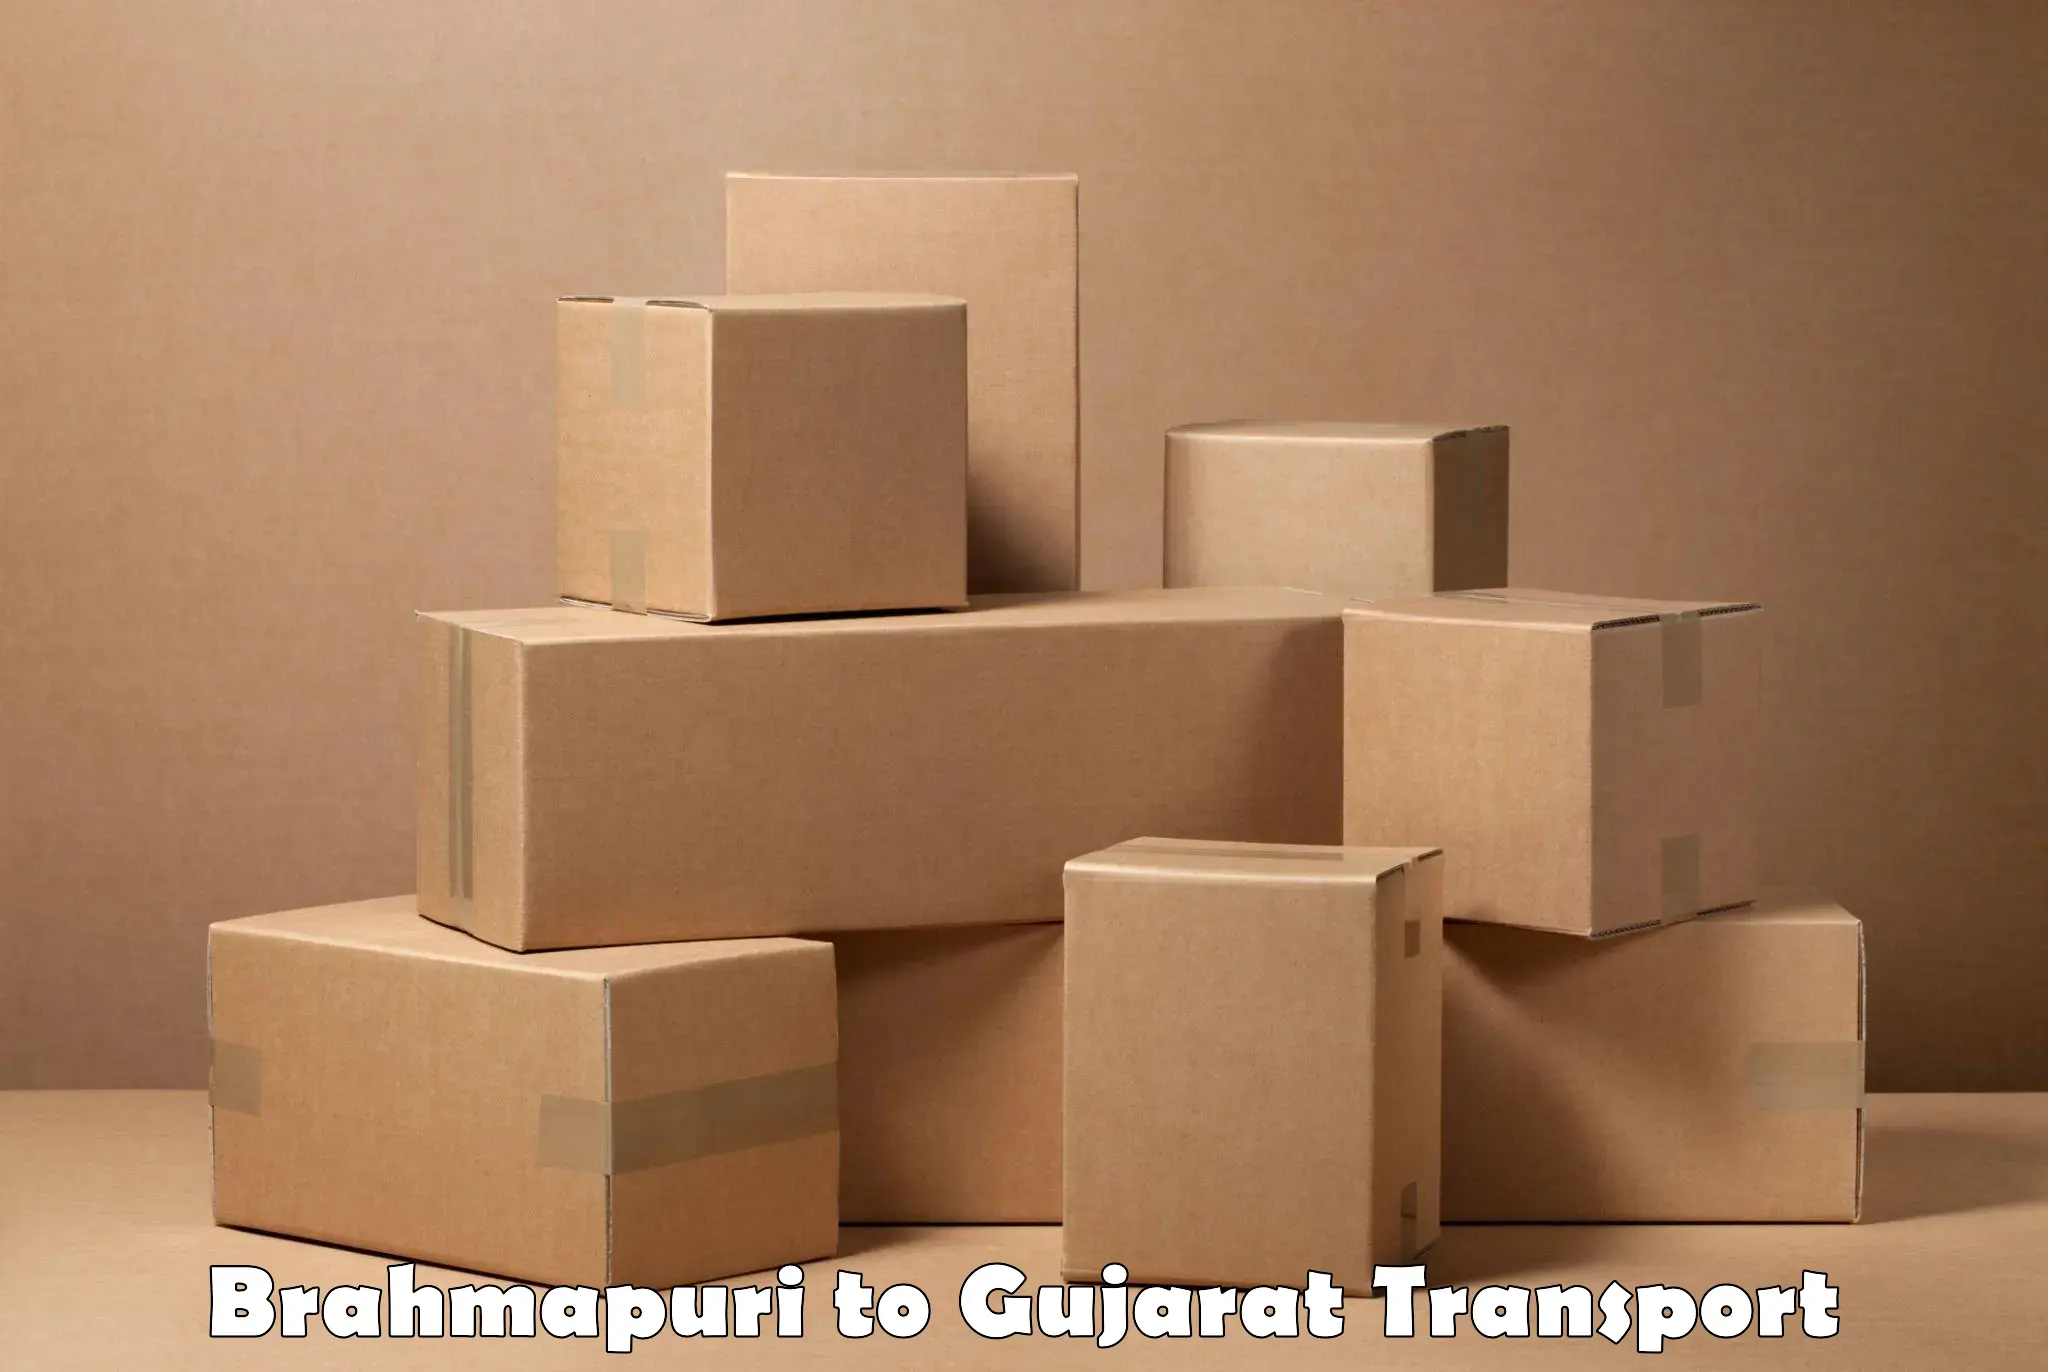 Daily parcel service transport Brahmapuri to Becharaji